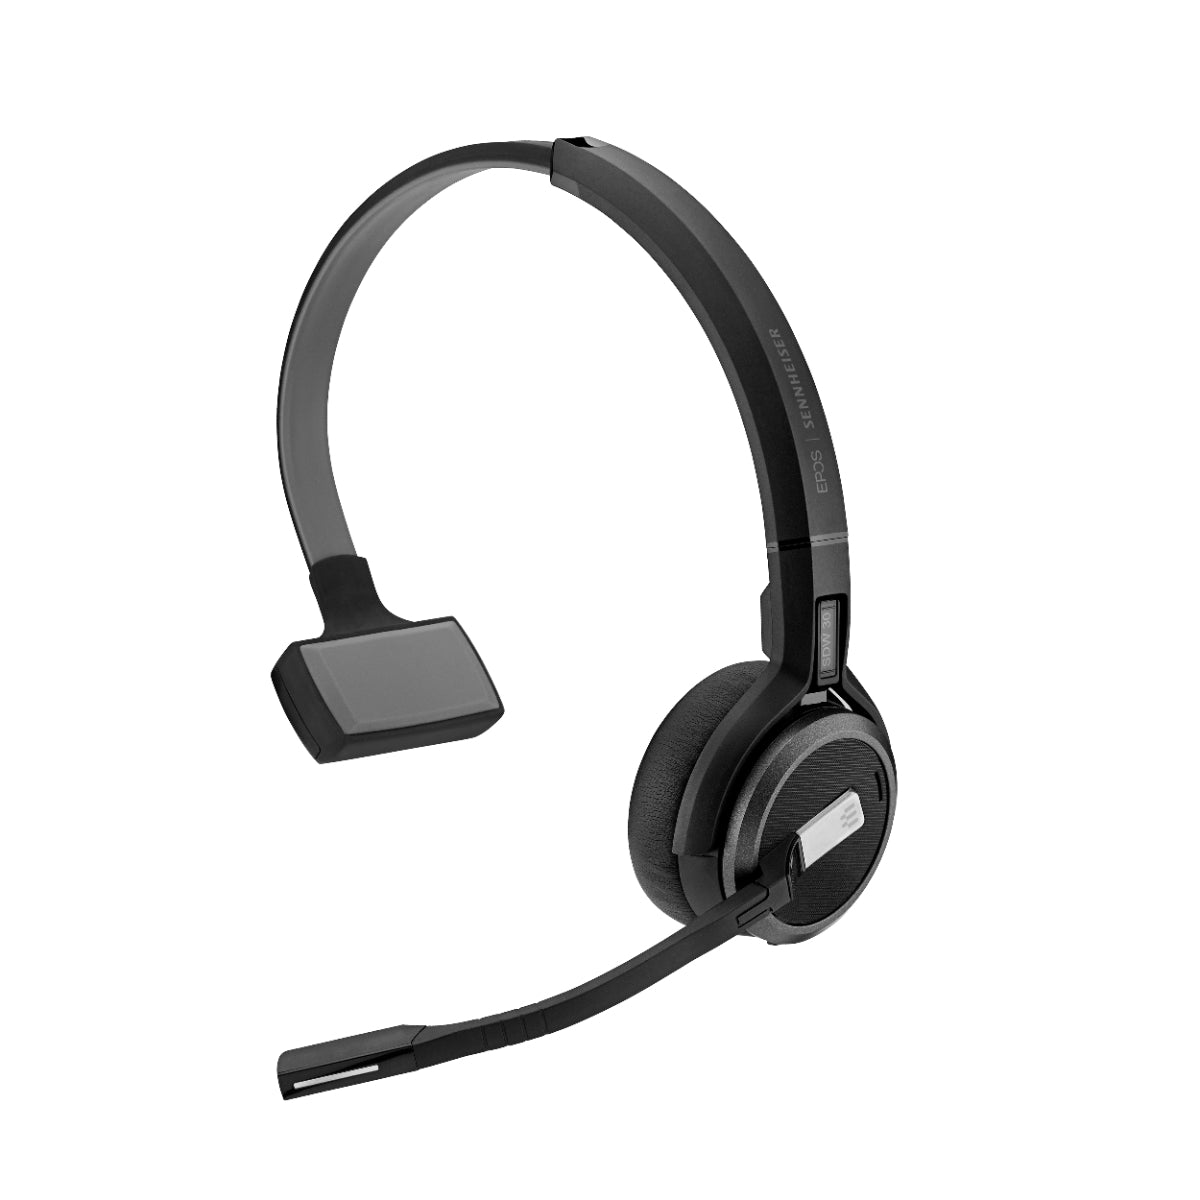 EPOS IMPACT SDW 5035 - EU Wireless Monaural DECT Headset, Black, With Dual Connectivity